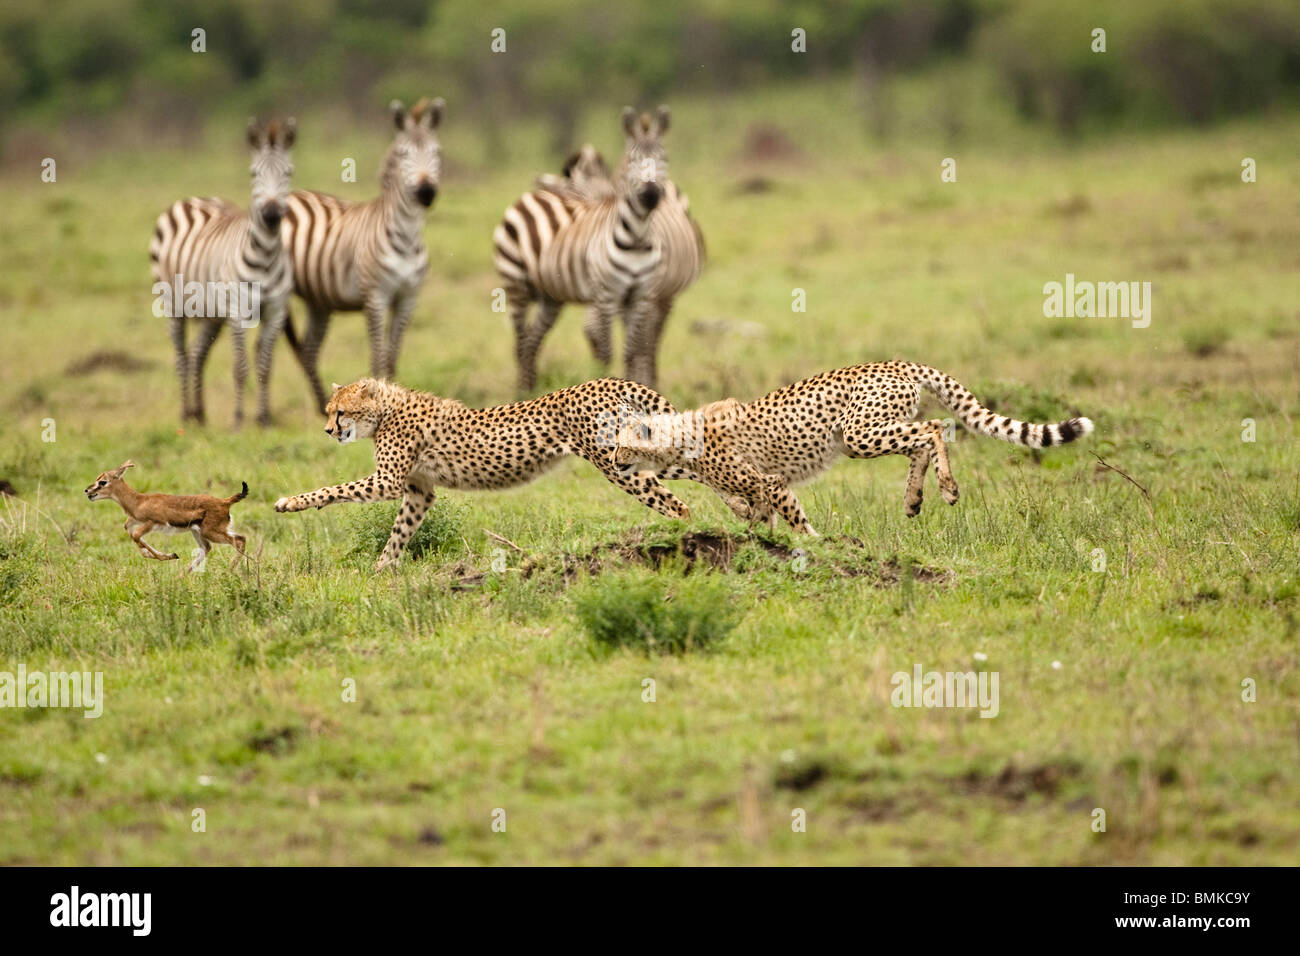 Cheetah, Acinonyx jubatus, cubs hunting and playing with baby gazelle in the Masai Mara GR, Kenya. Stock Photo